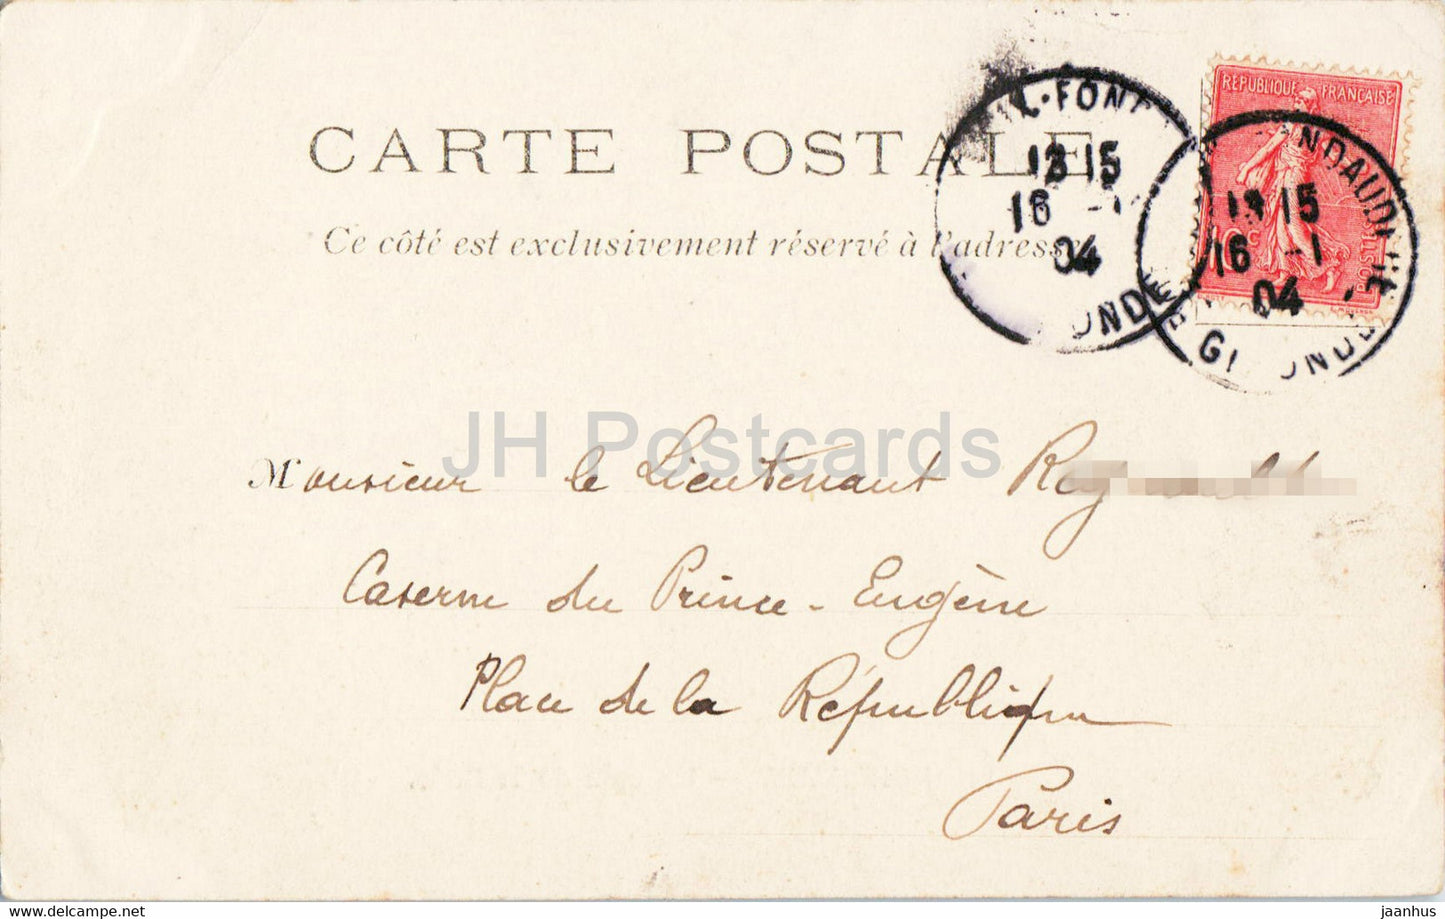 Bordeaux - Un coin de la Rade - sailing boat - ship - horse carriage - 24 - old postcard - 1904 - France - used